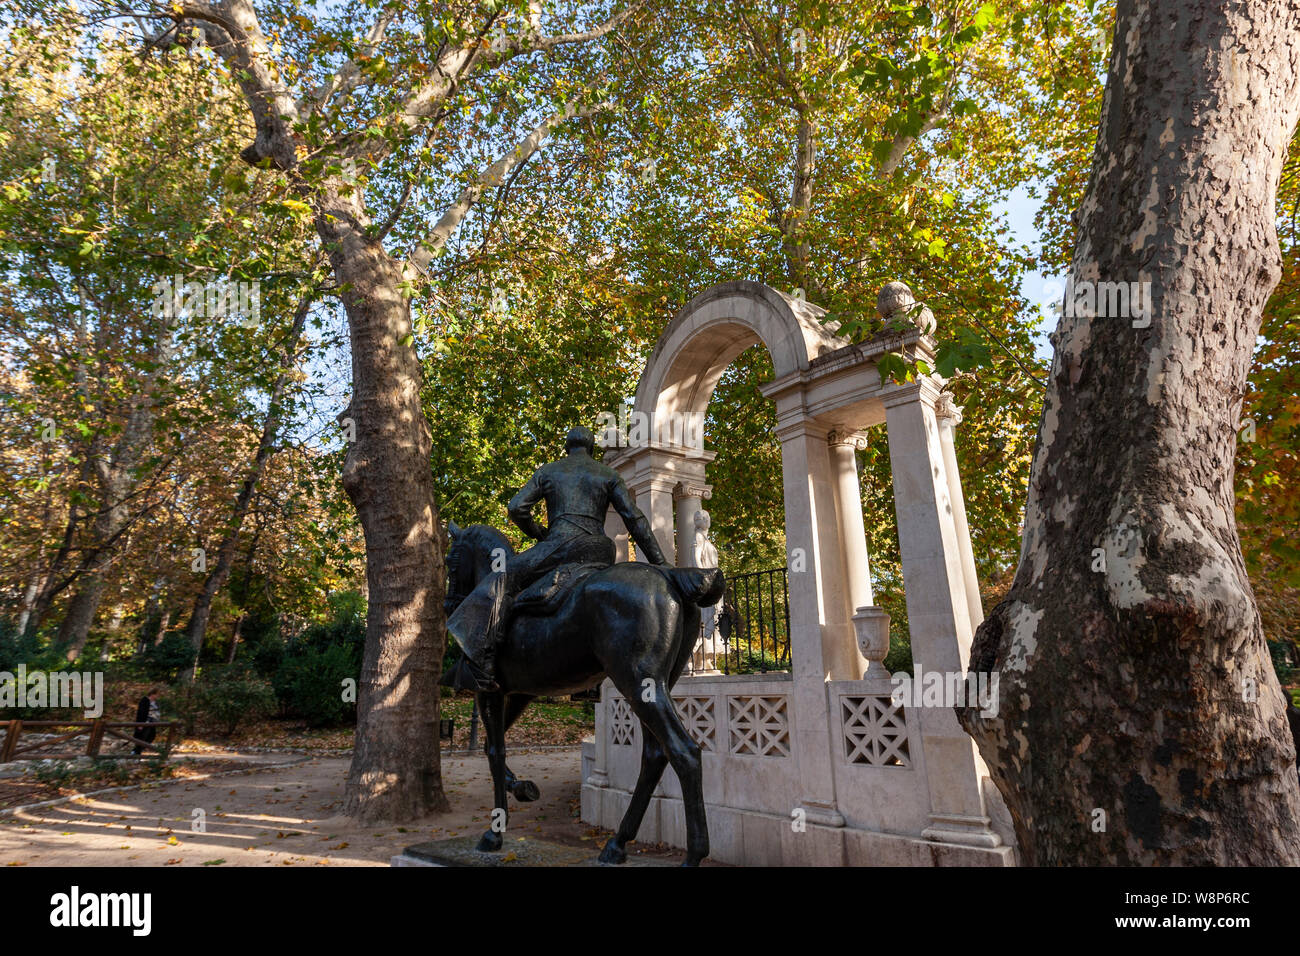 Monument à Serafín y Joaquín Álvarez Quintero, Parque del Buen Retiro, Madrid, Espagne Banque D'Images